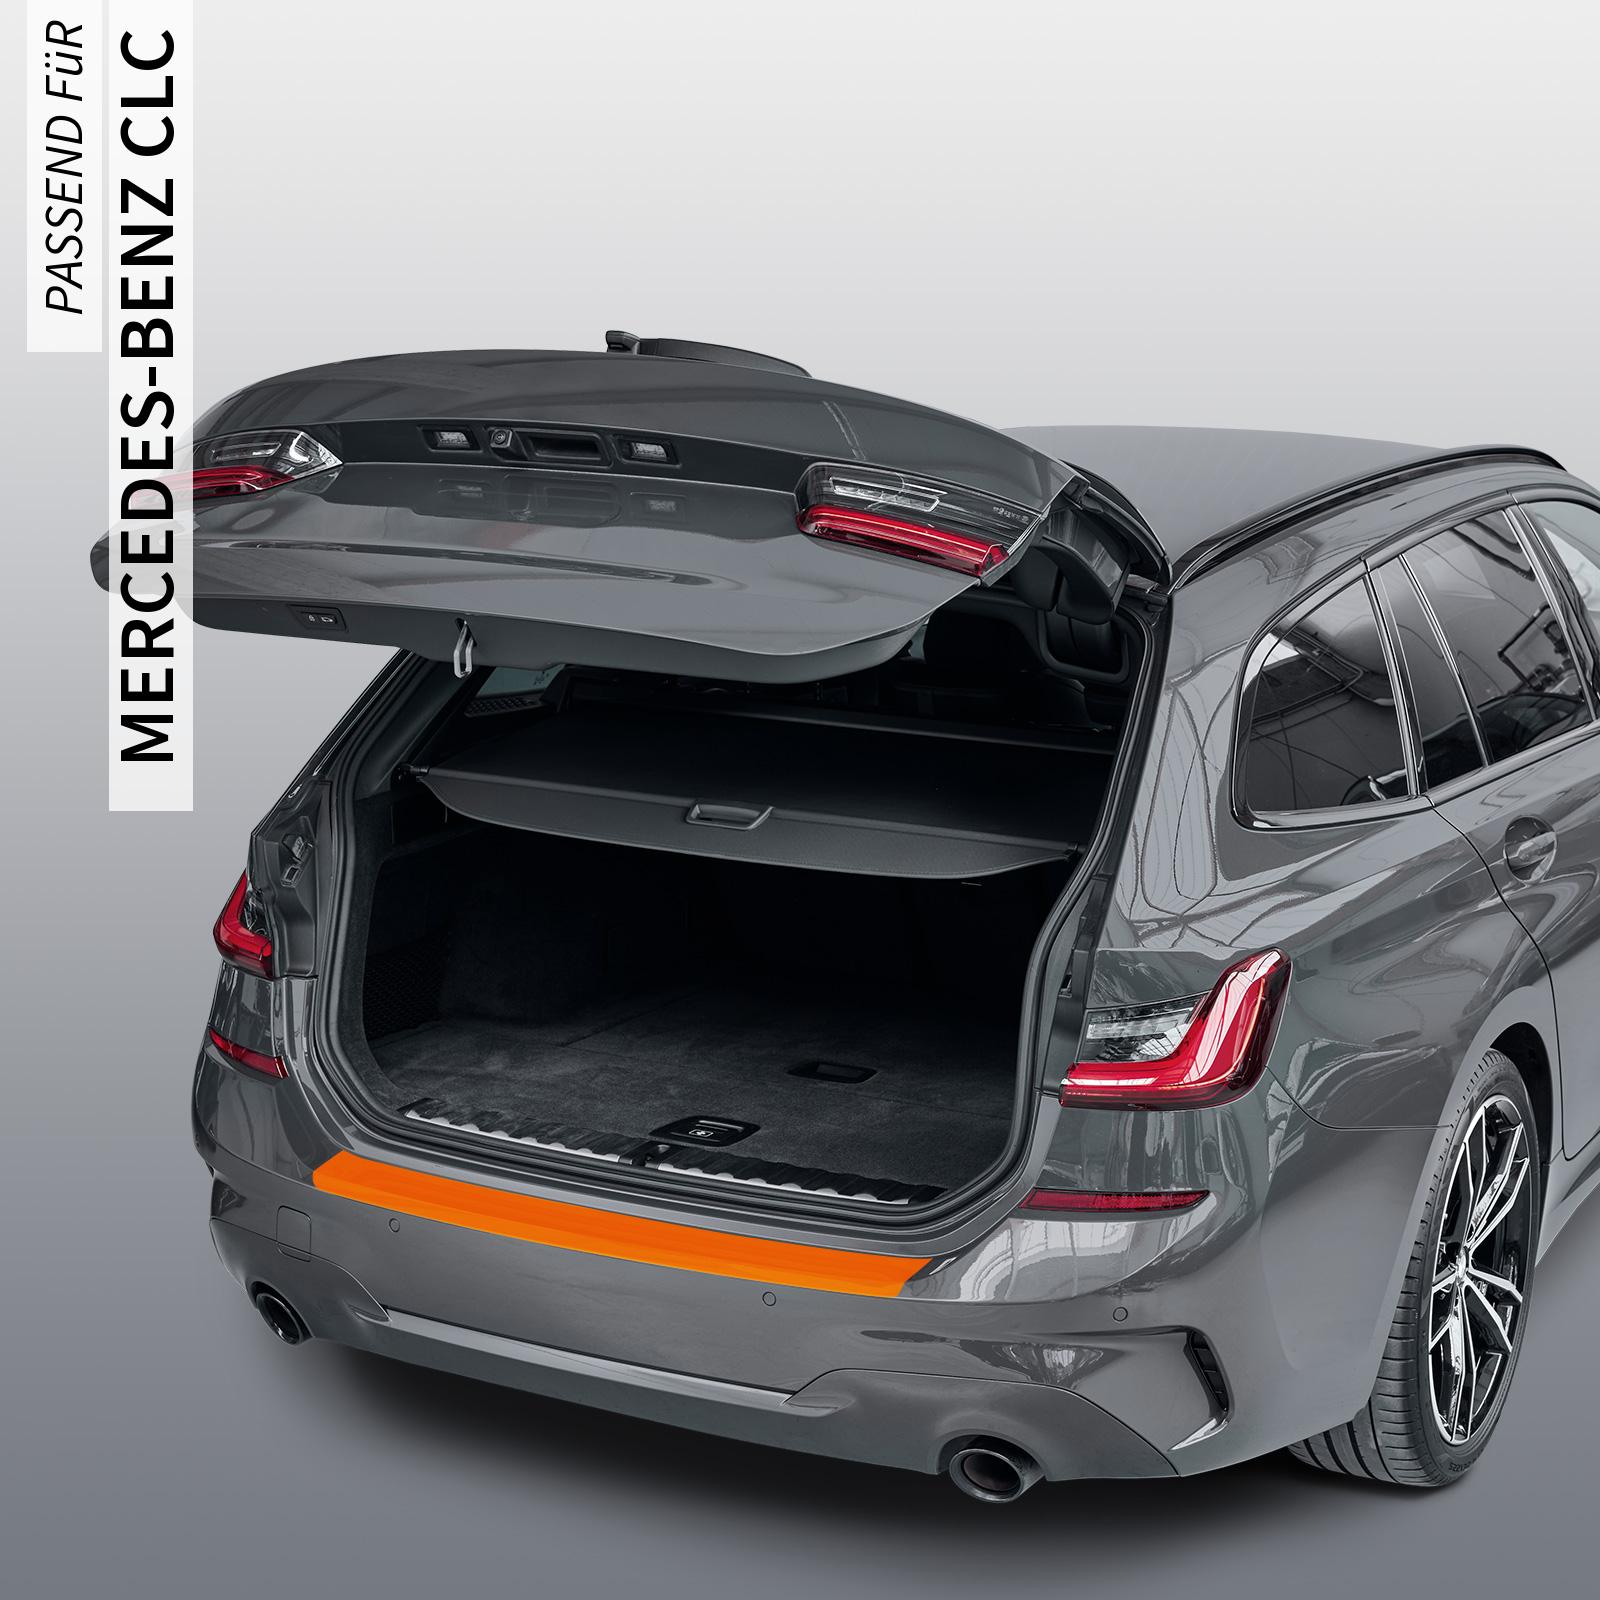 Ladekantenschutzfolie - Transparent Glatt MATT 110 µm stark  für Mercedes-Benz CLC Typ C204, BJ 2008-2011